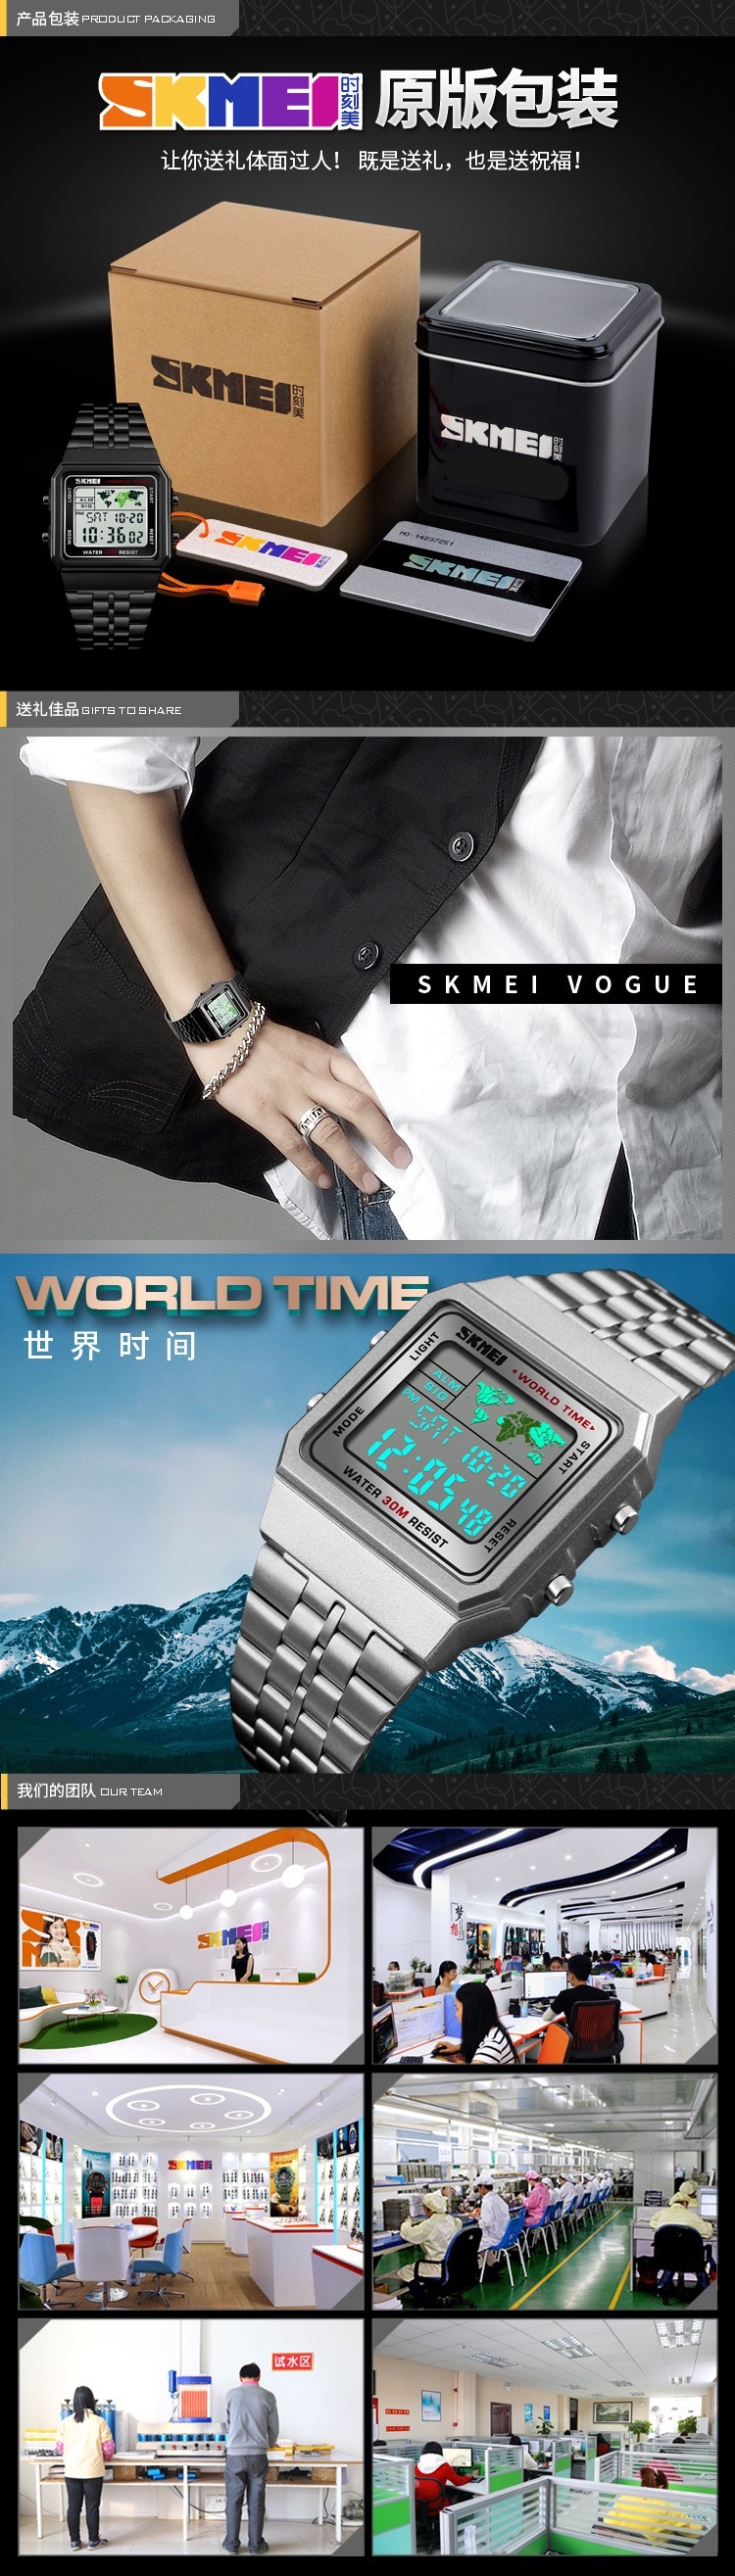 SKMEI新款商务时尚方形电子表 秒表倒计时世界时间多功能钢带手表详情3